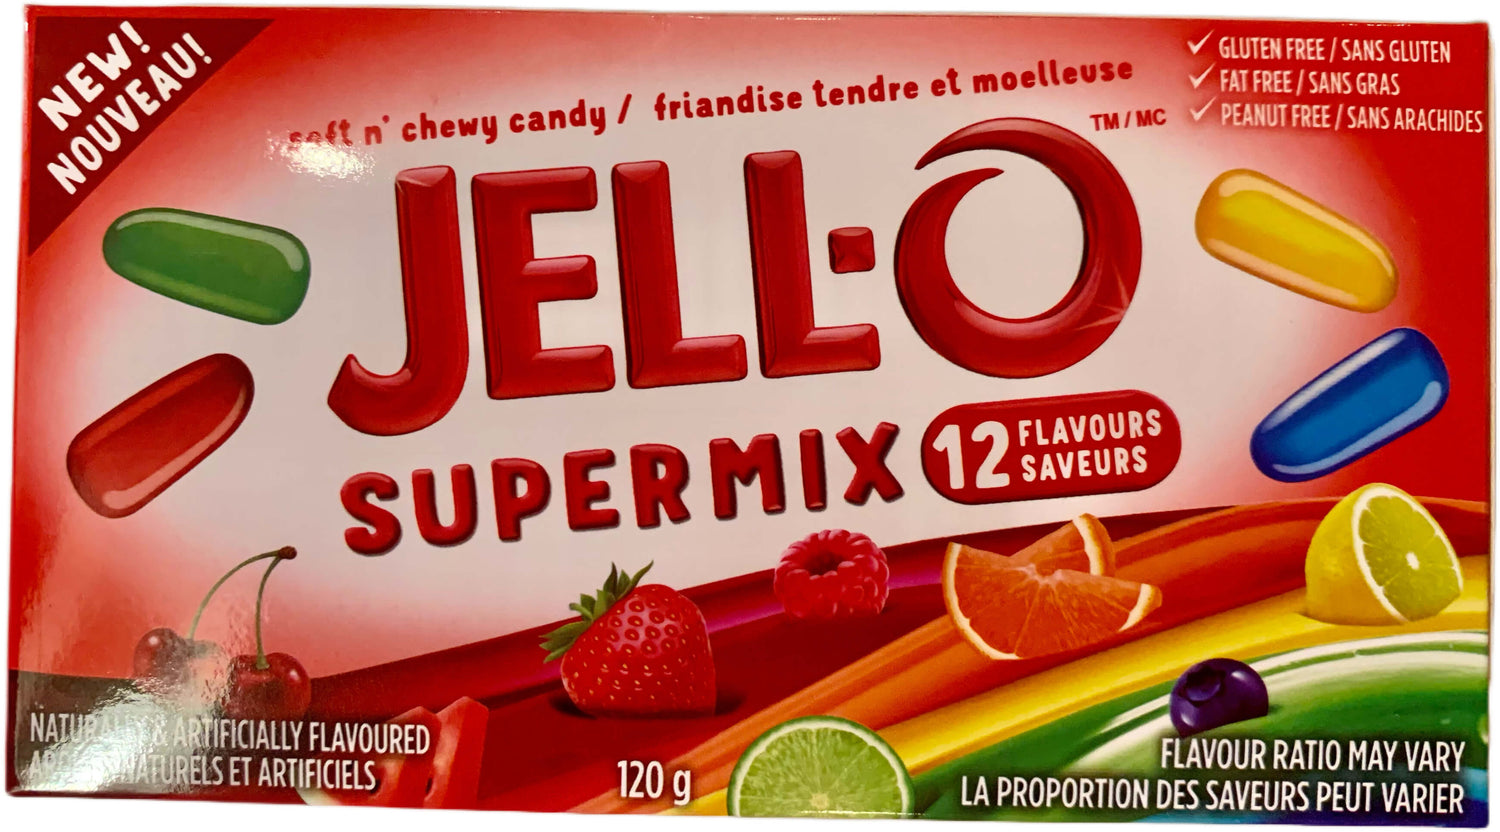 Bonbons Jell-O aux fruits 12 saveurs